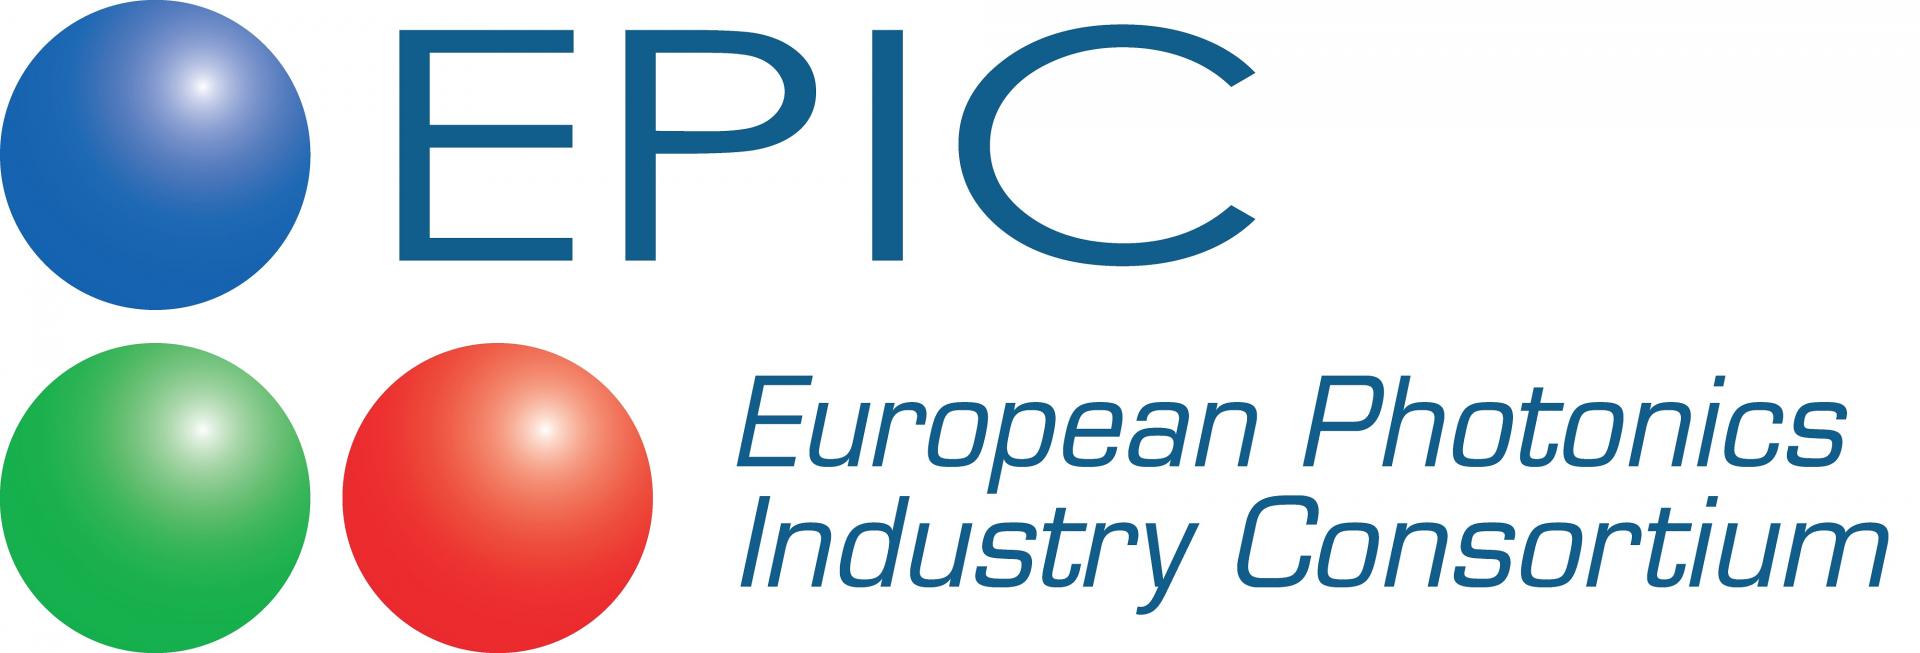 Epic logo high resolution2